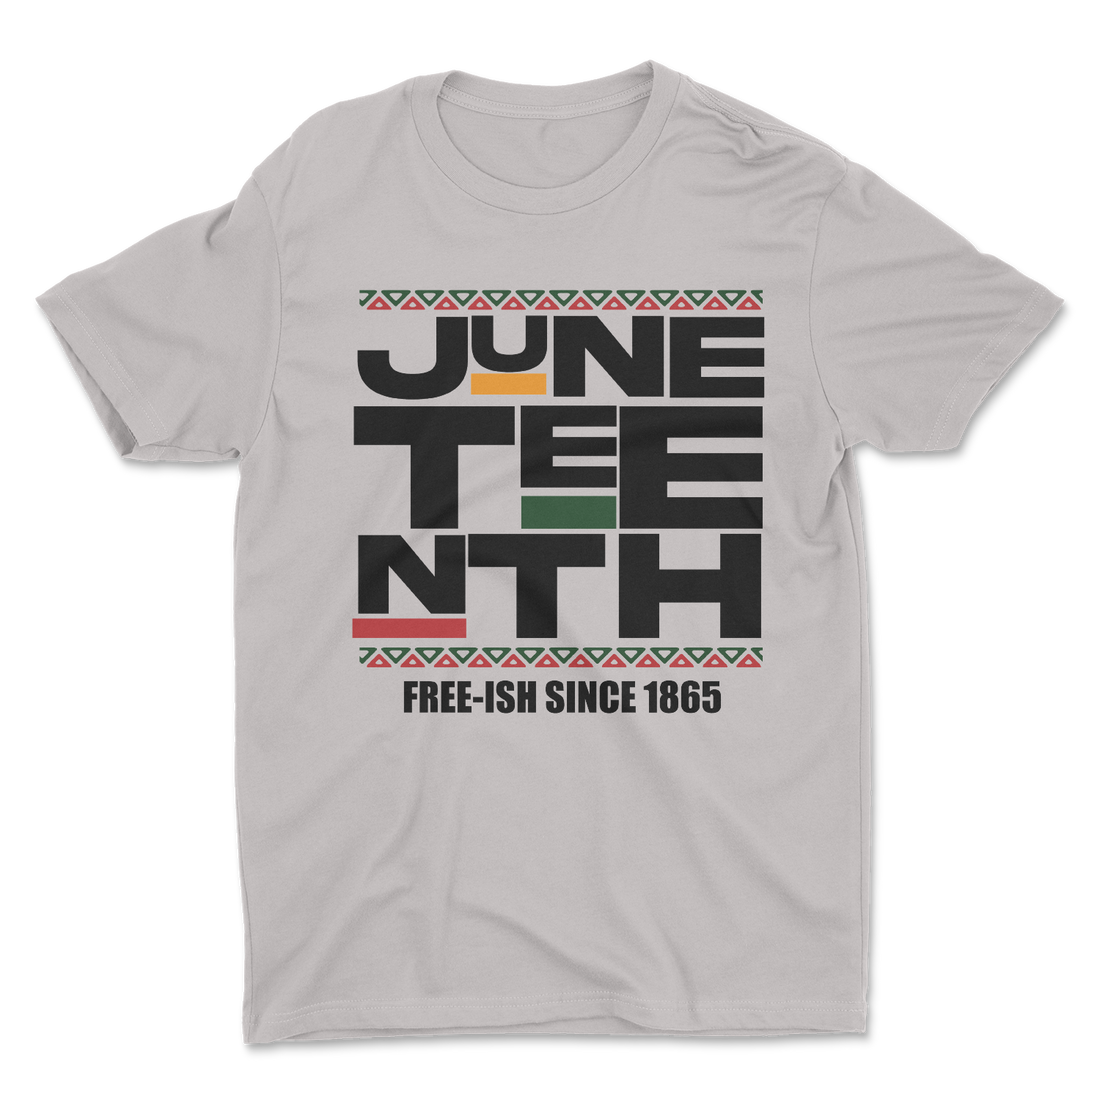 juneteenth-free-ish-since-1865-silver-tee-shirt-fabfiveprintshop